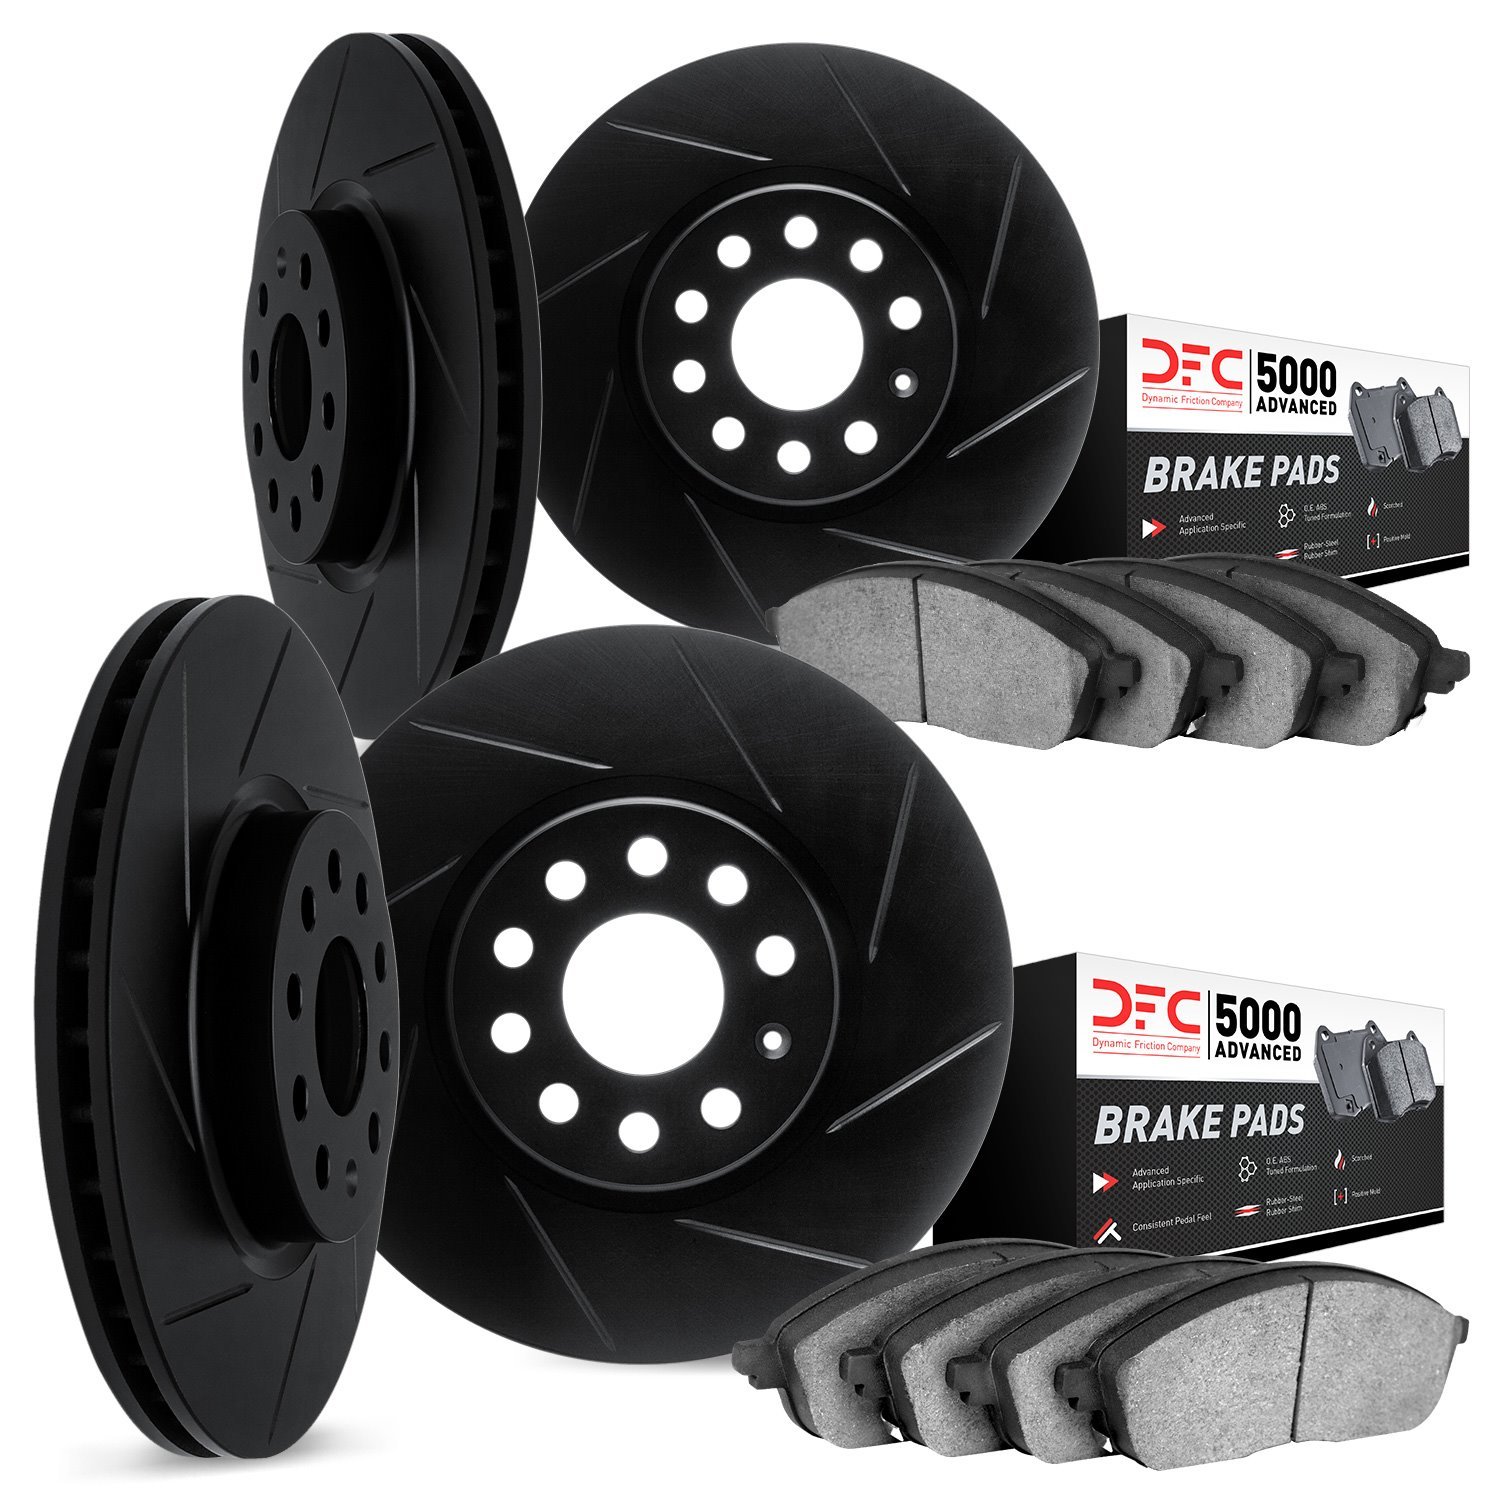 3514-13037 Slotted Brake Rotors w/5000 Advanced Brake Pads Kit & Hardware [Black], 2006-2014 Subaru, Position: Front and Rear